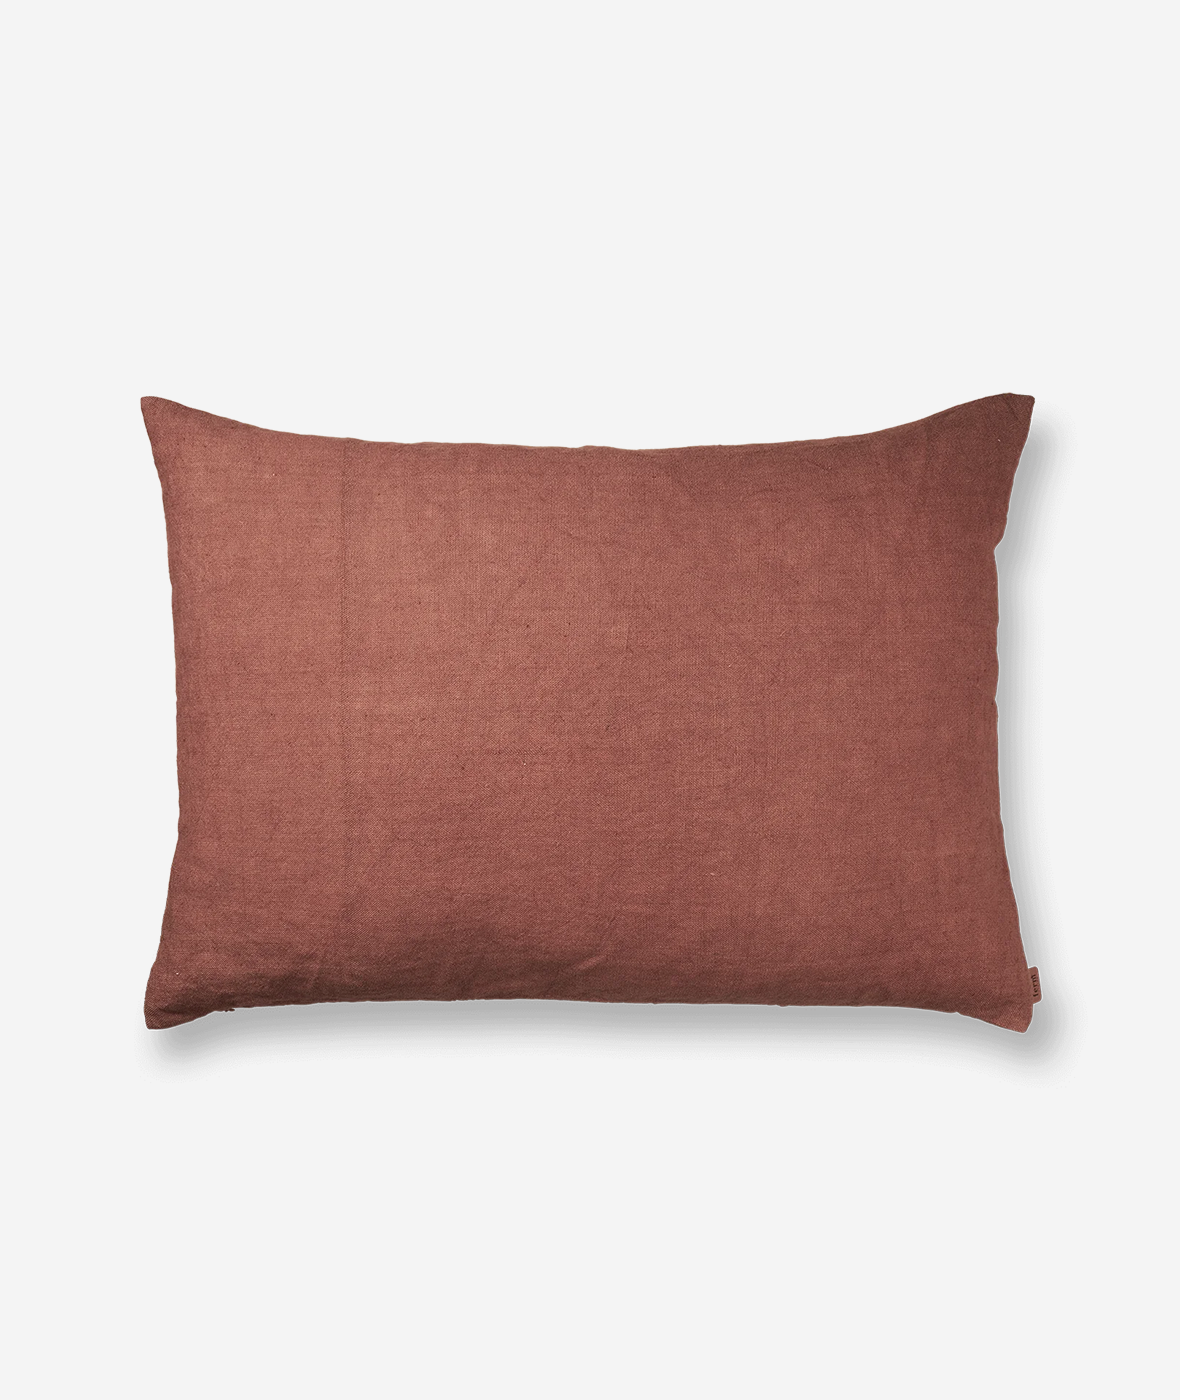 Heavy Linen Pillow - More Options